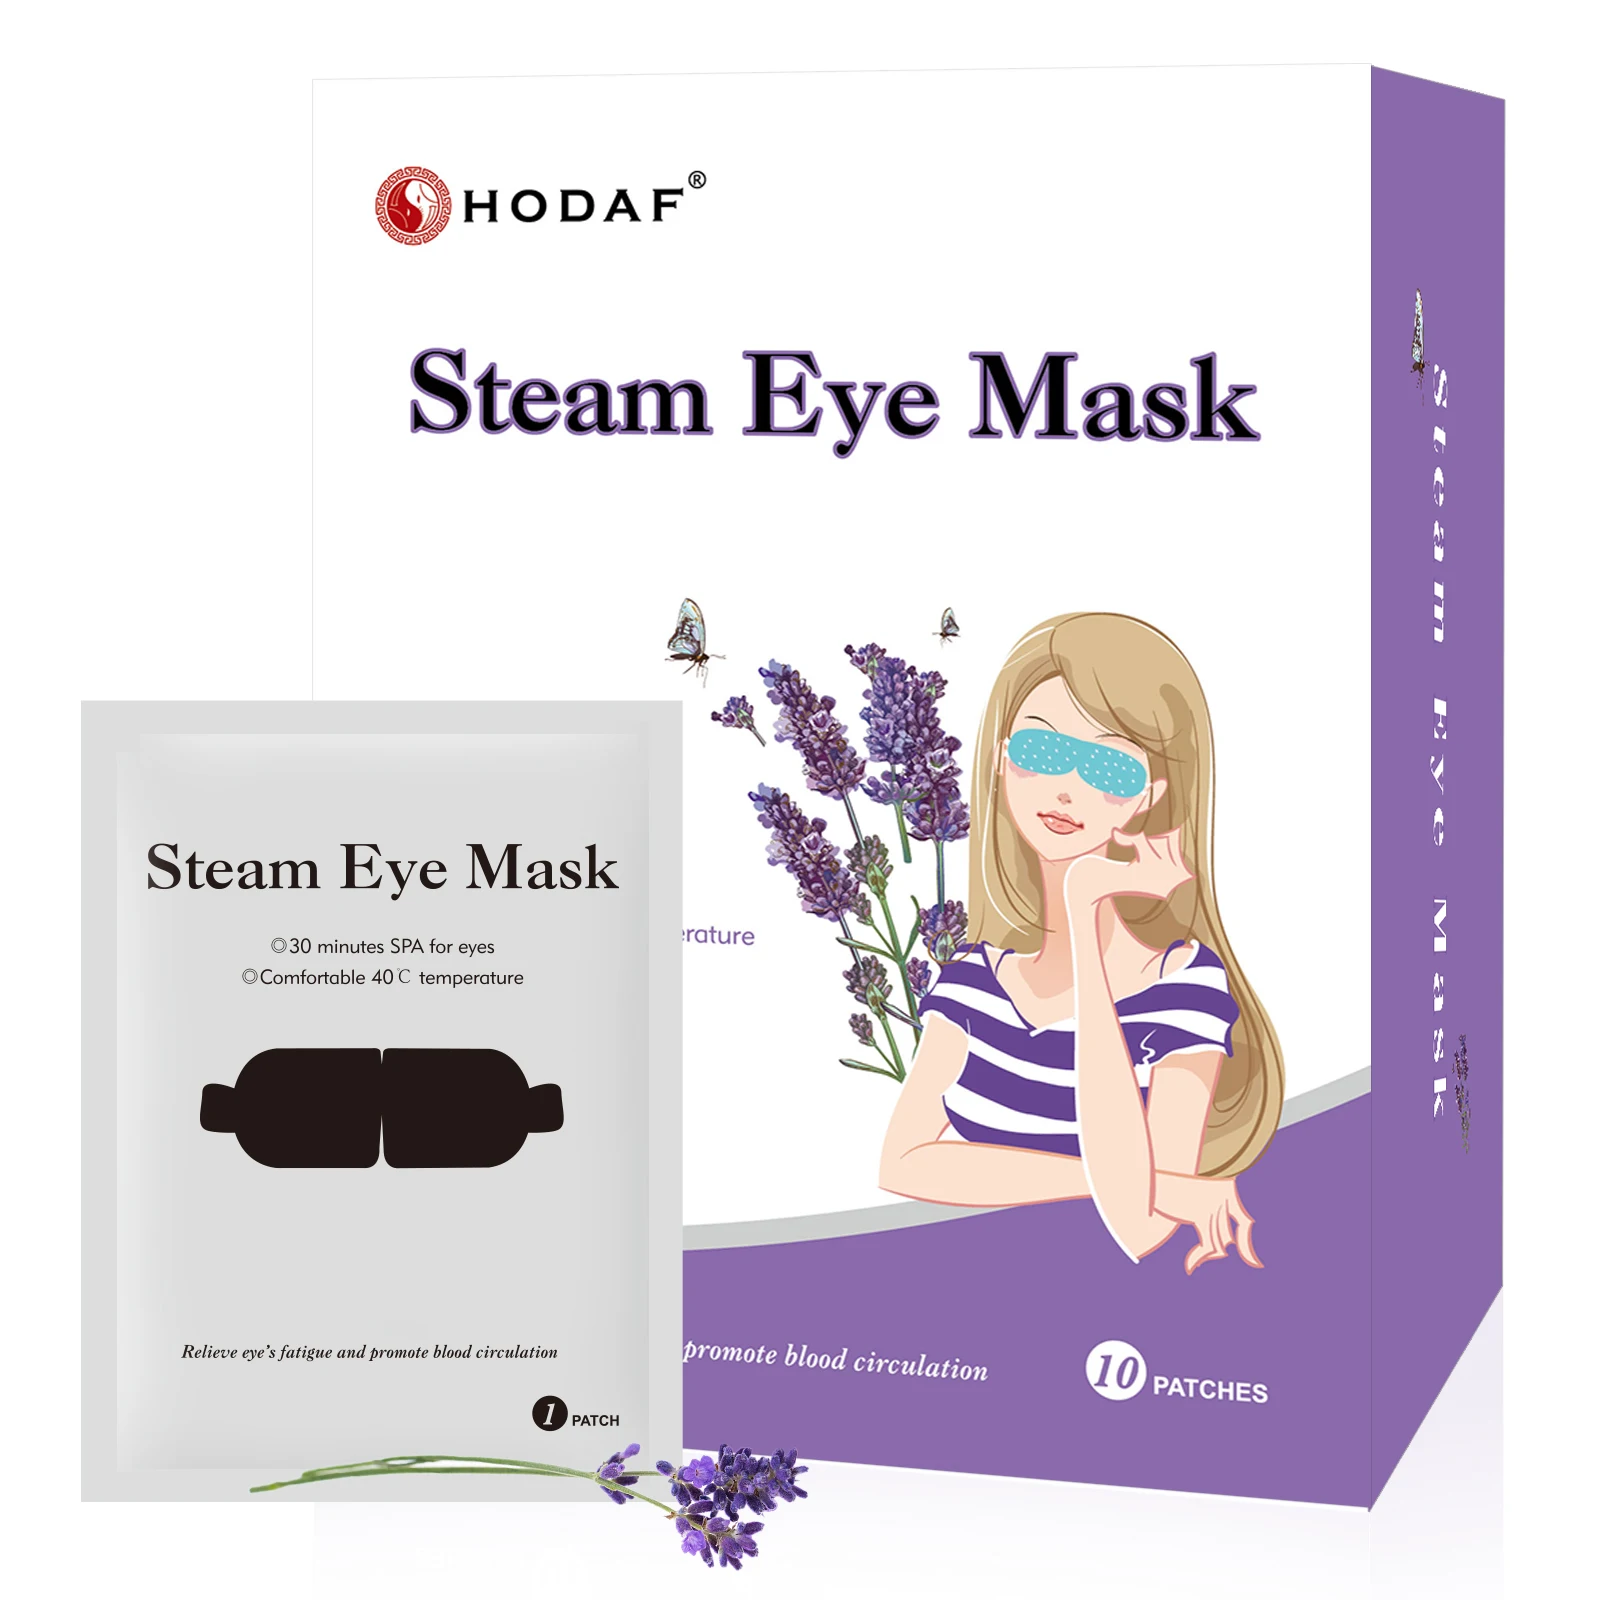 Lavender steam eye mask что это такое фото 23